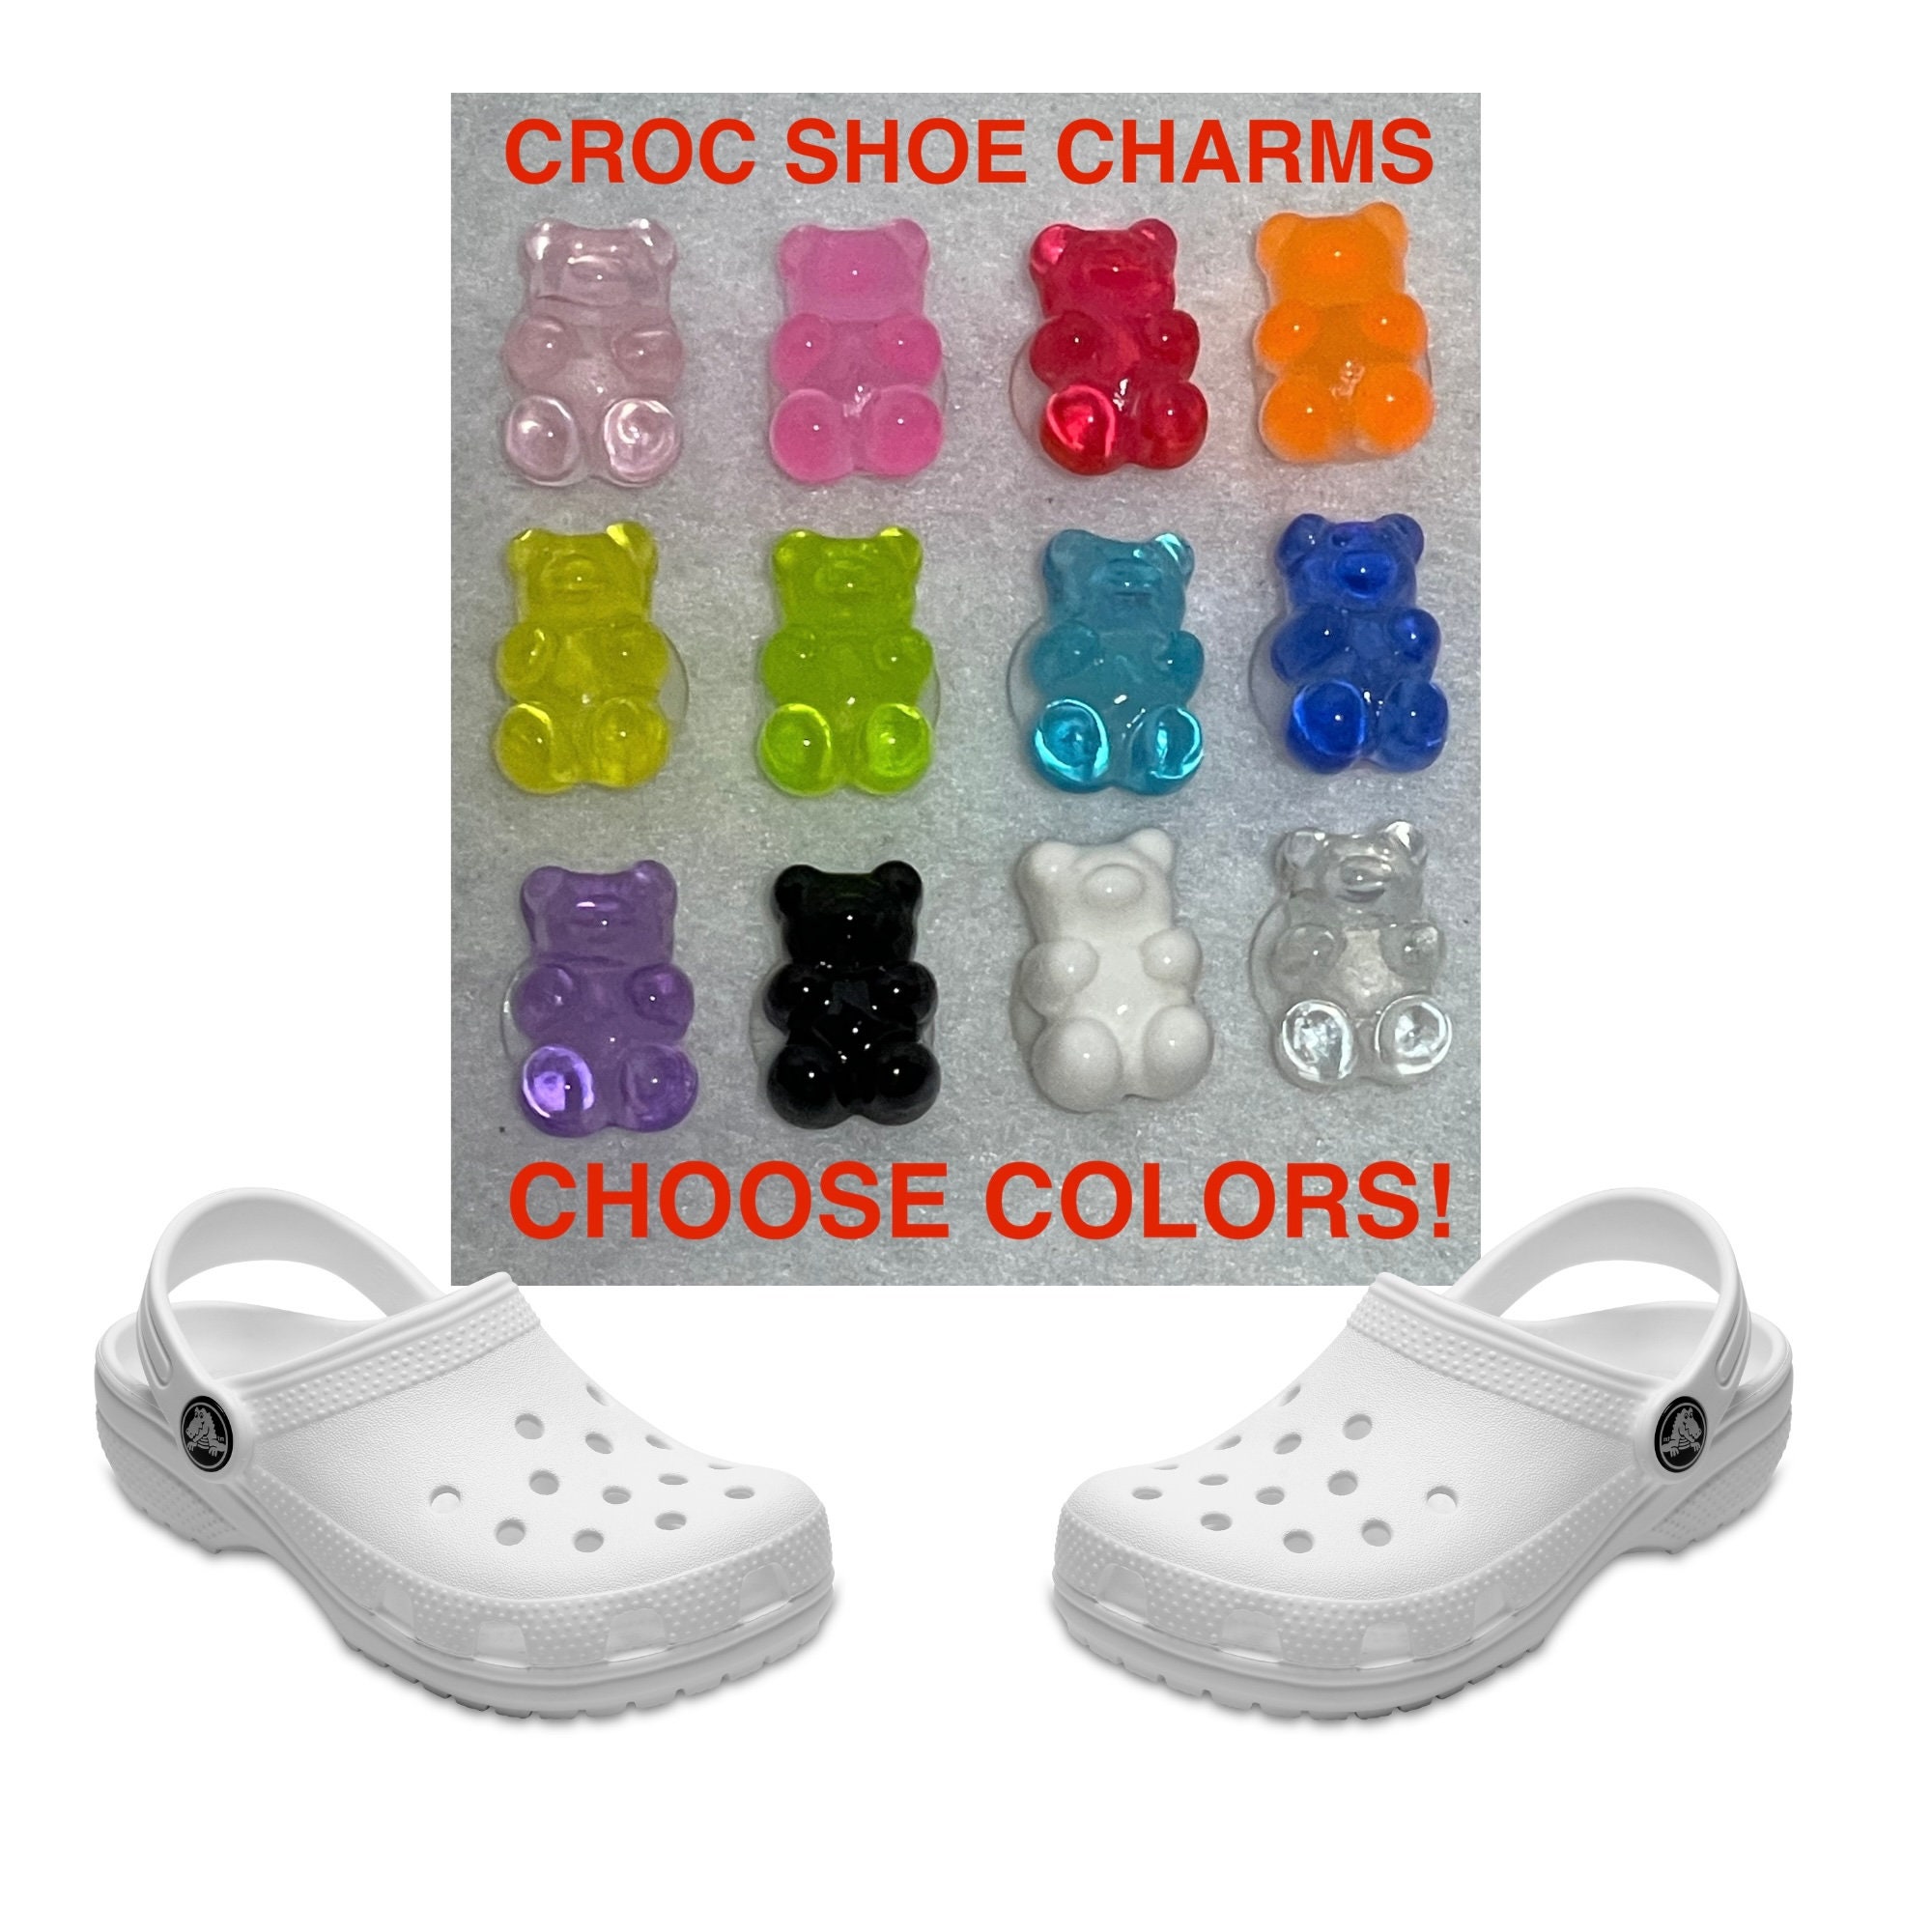 Hood Clog Charms, Black Shoe Charms, Melanin Charms for Crocs